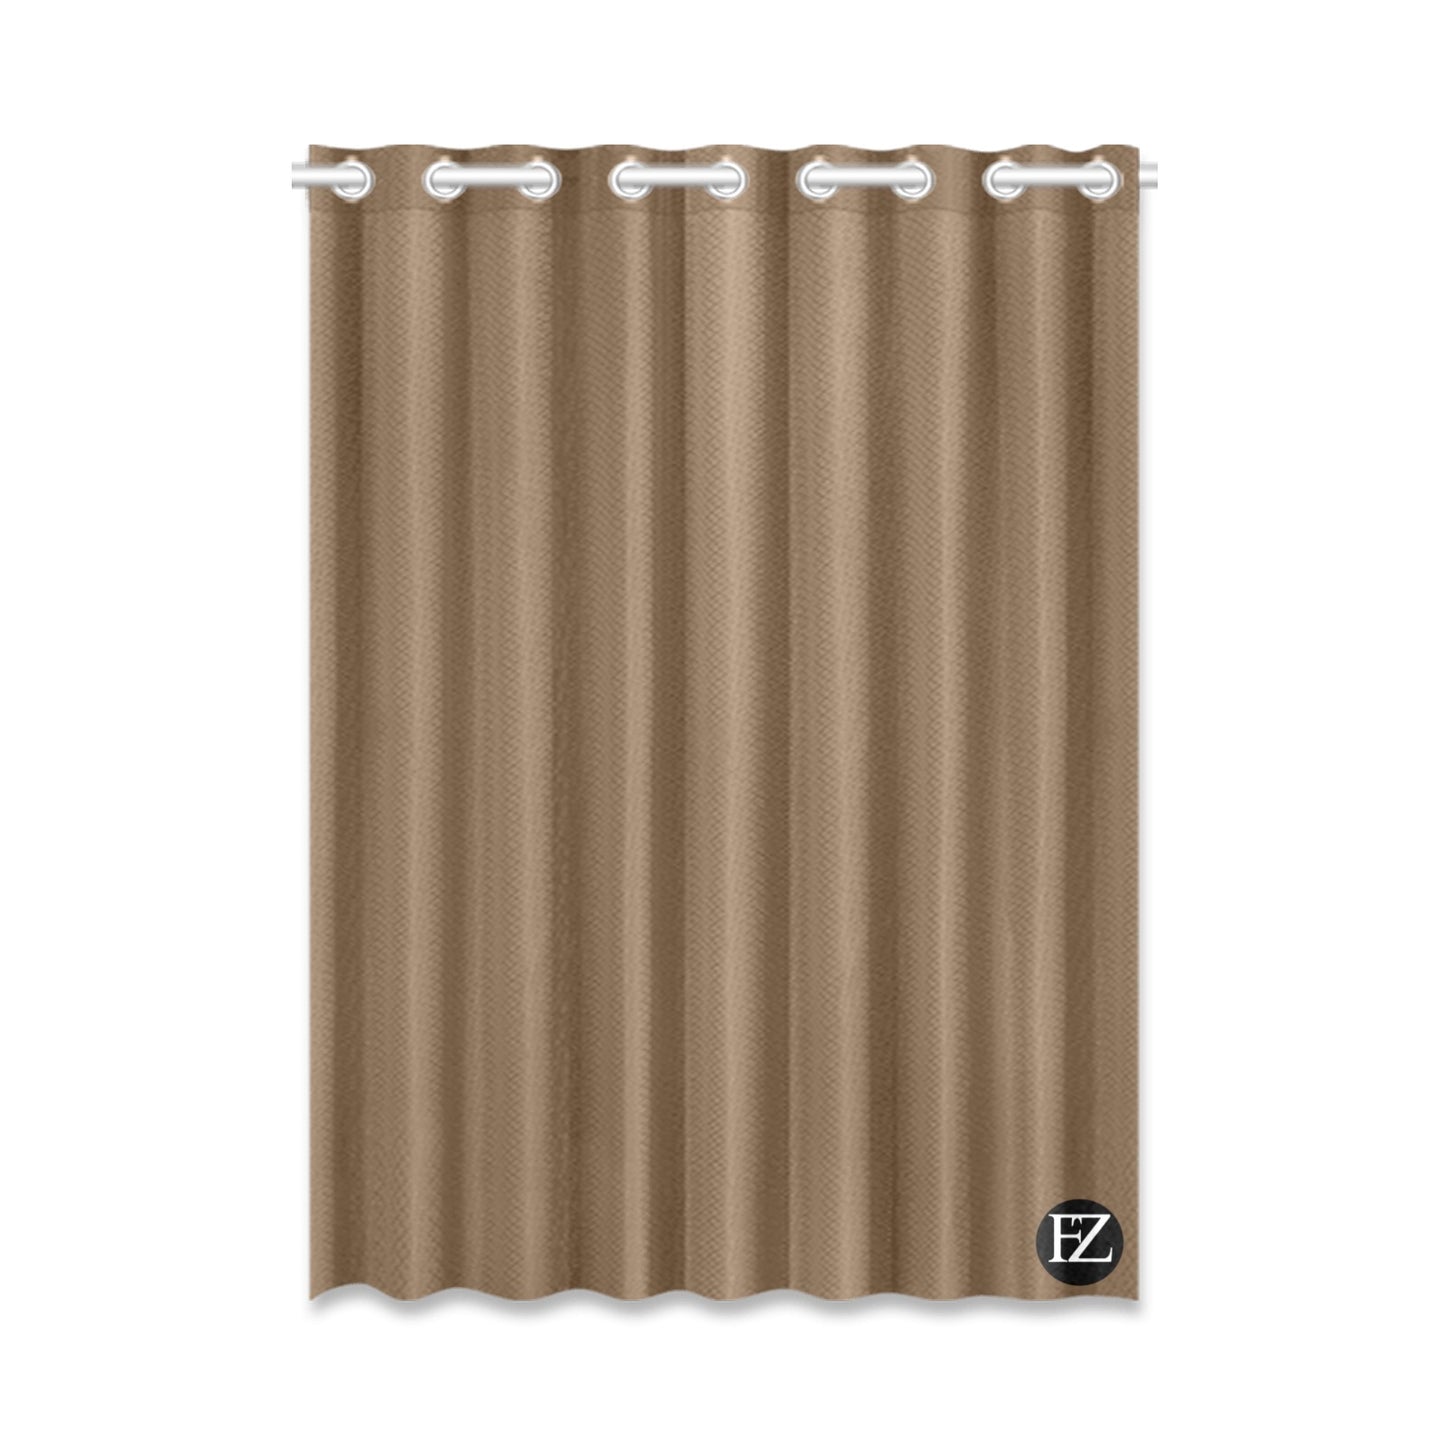 fz window curtain one size / fz room curtains - brown window curtain 52" x 72" (one piece)